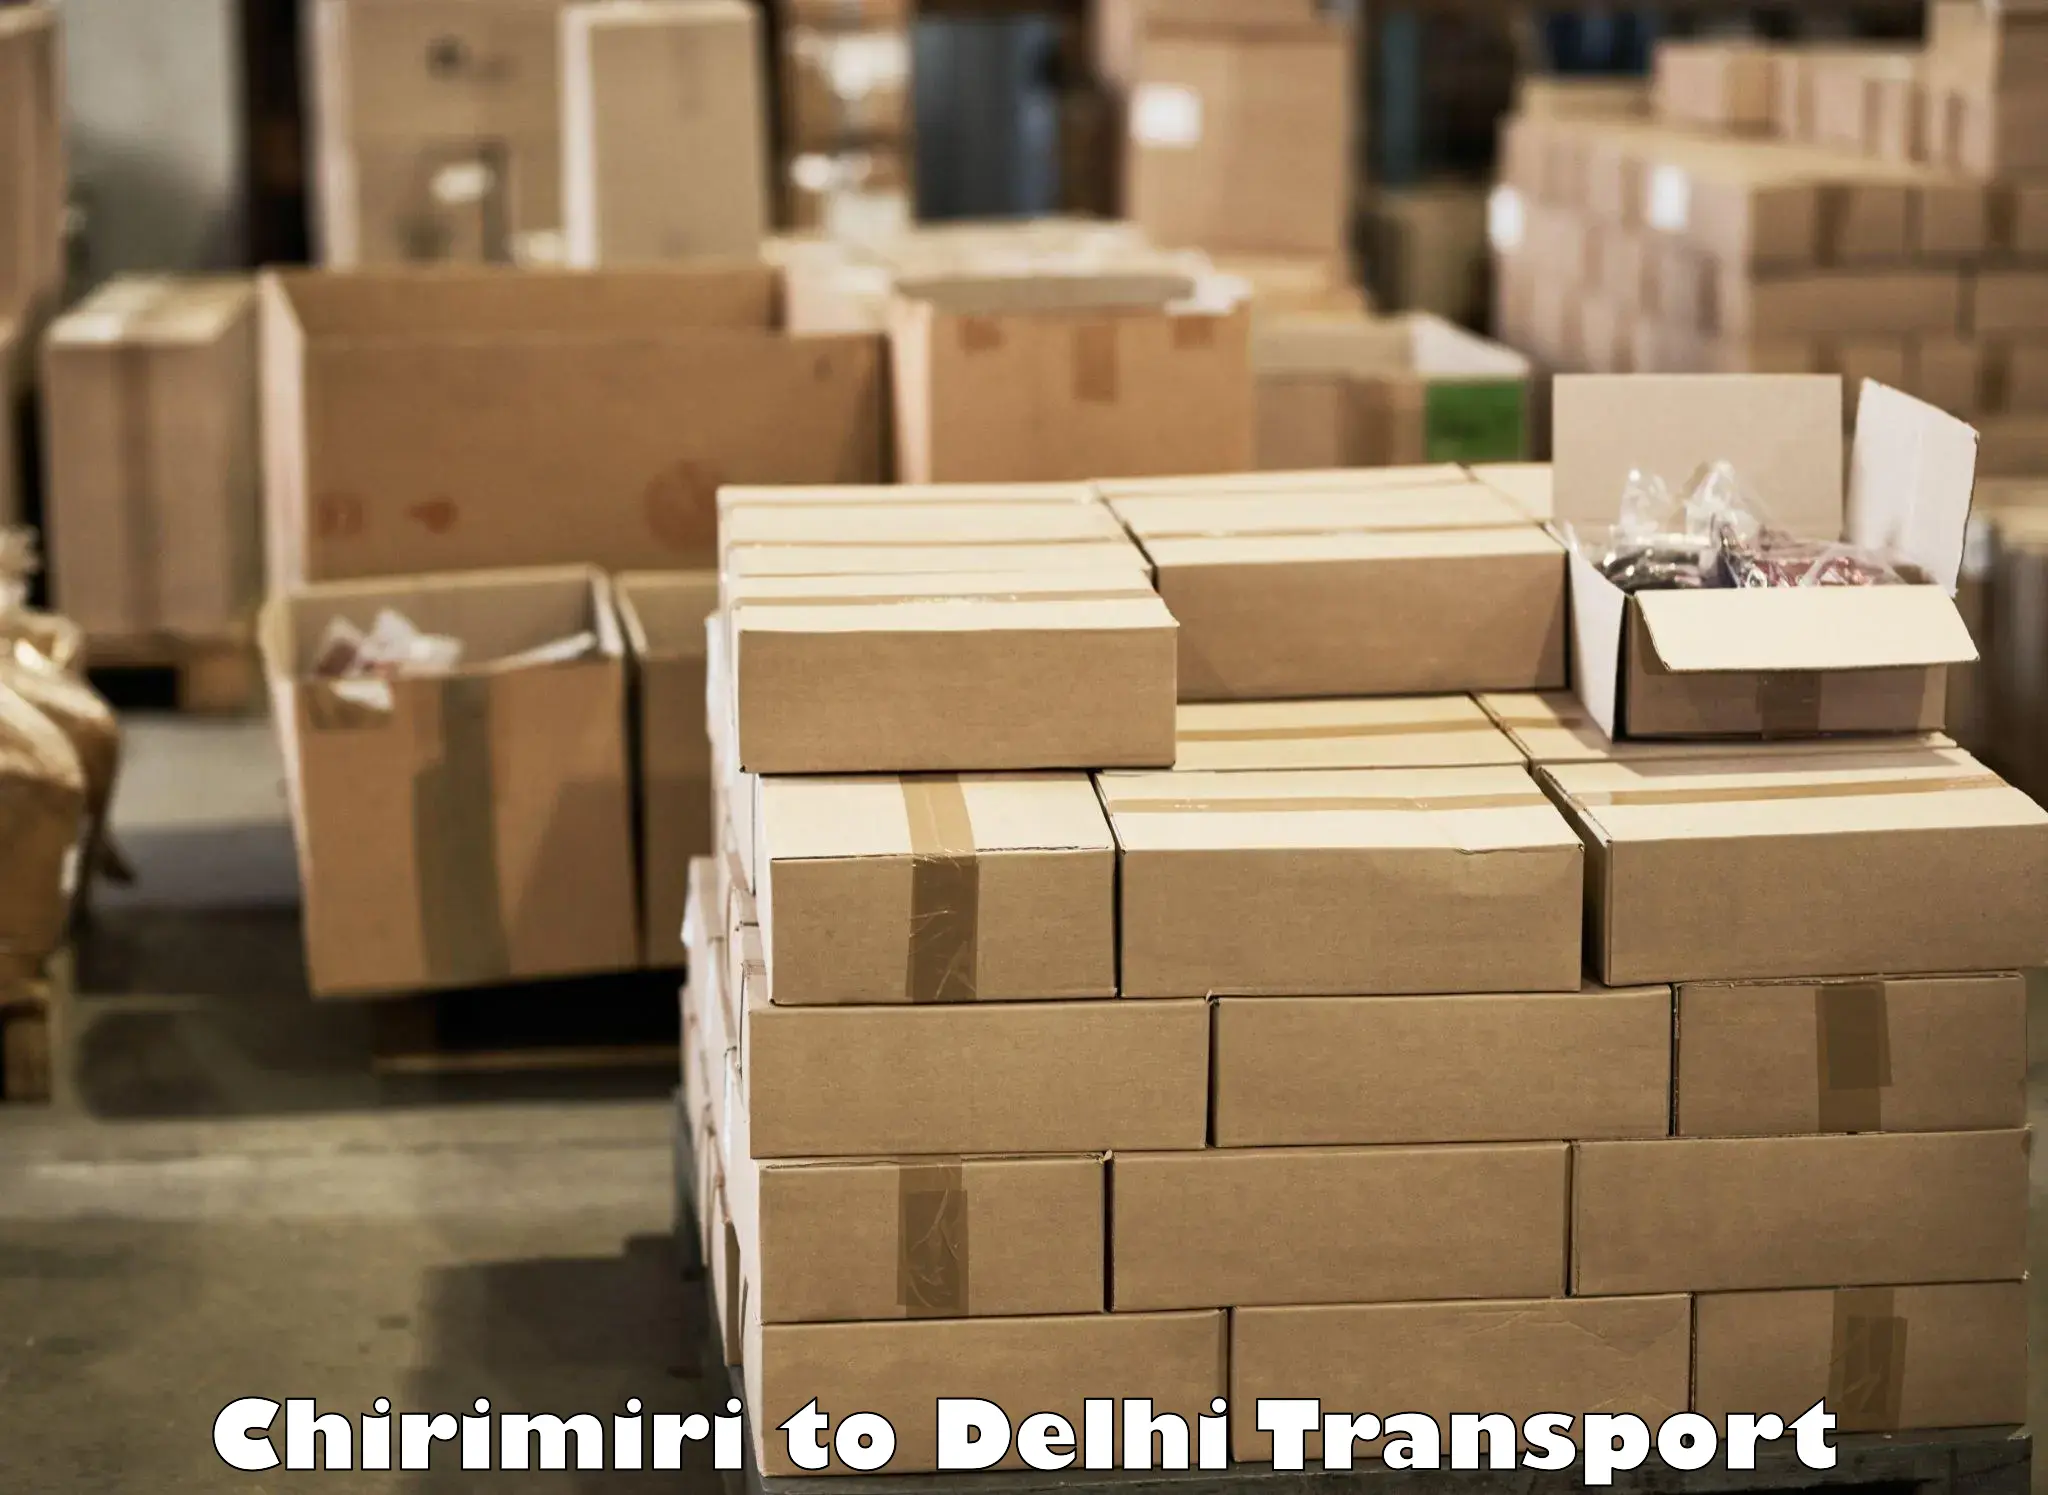 Truck transport companies in India Chirimiri to Delhi